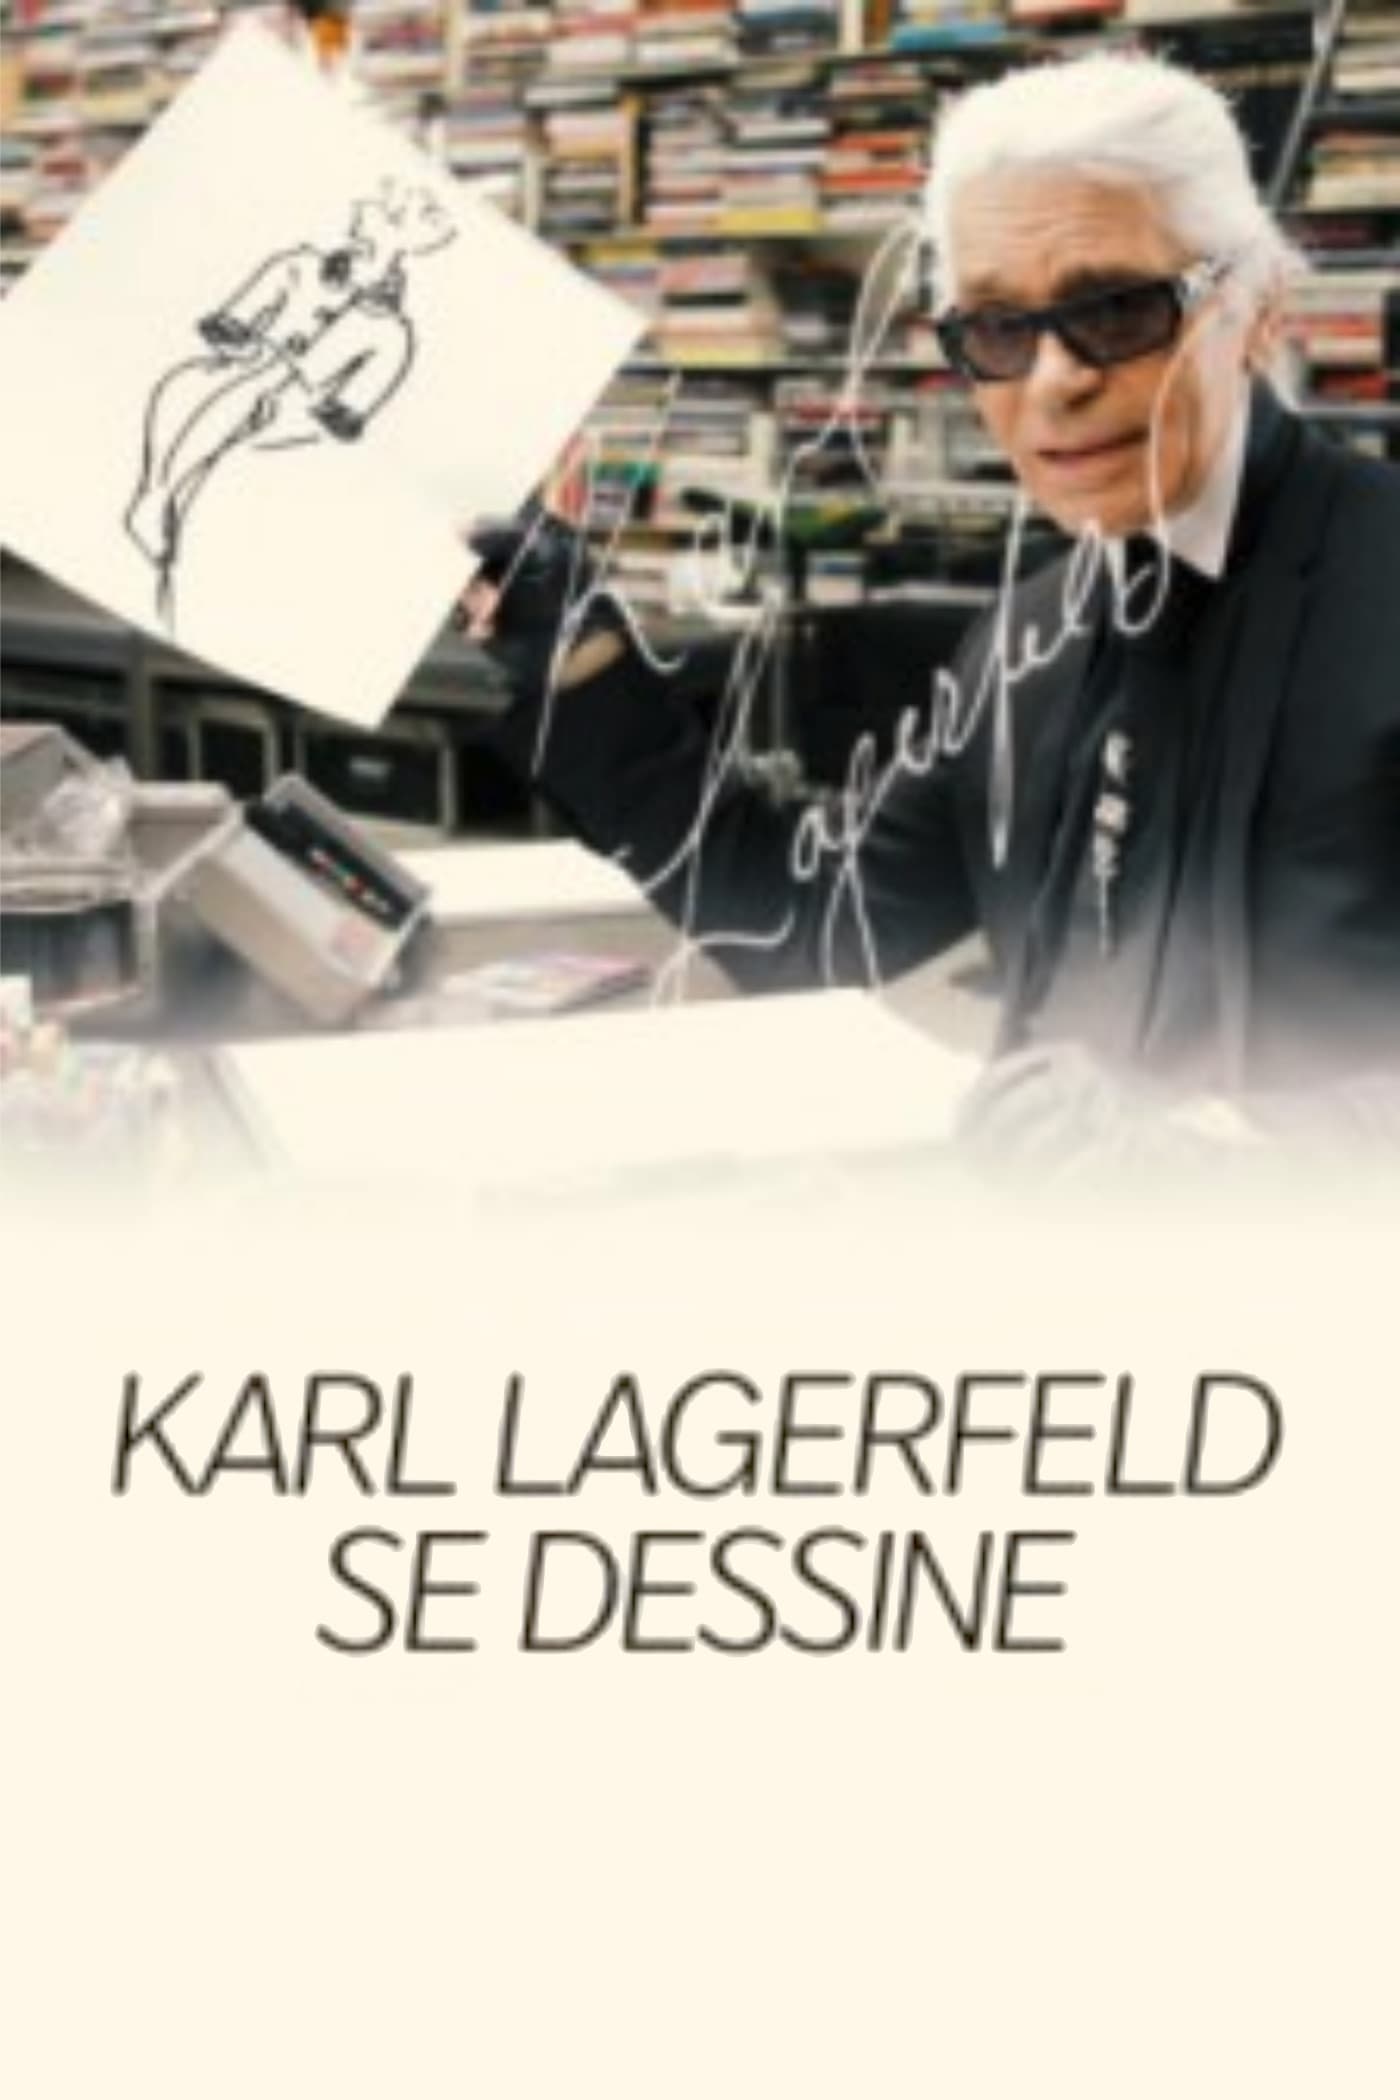 Karl Lagerfeld se dessine